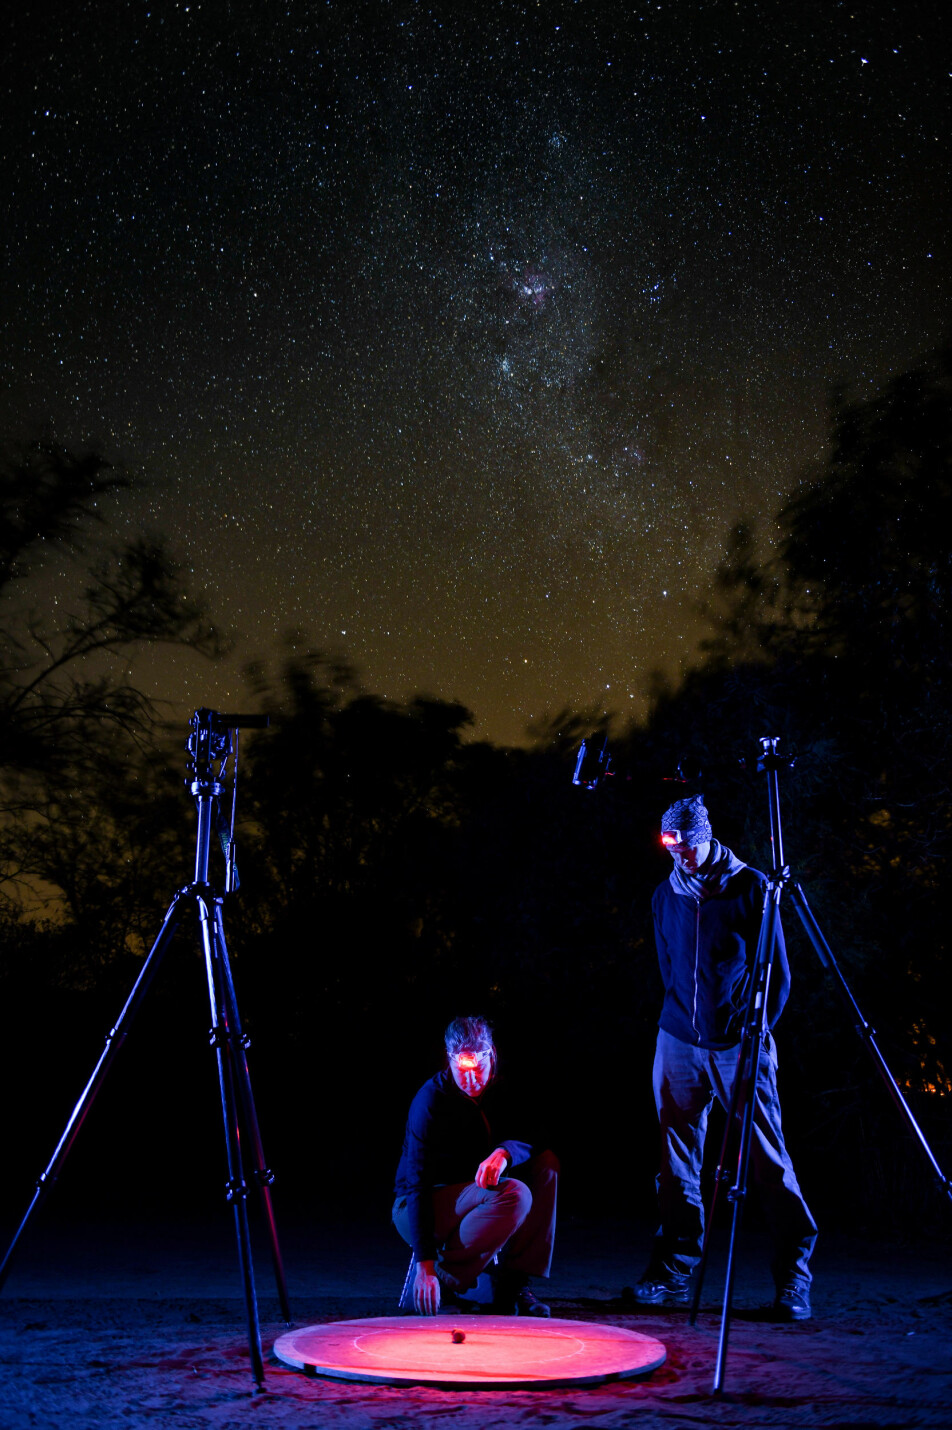 Her er forskerne midt i ødemarka, og her kan møkkabilla tydelig se stjernene på nattehimmelen.